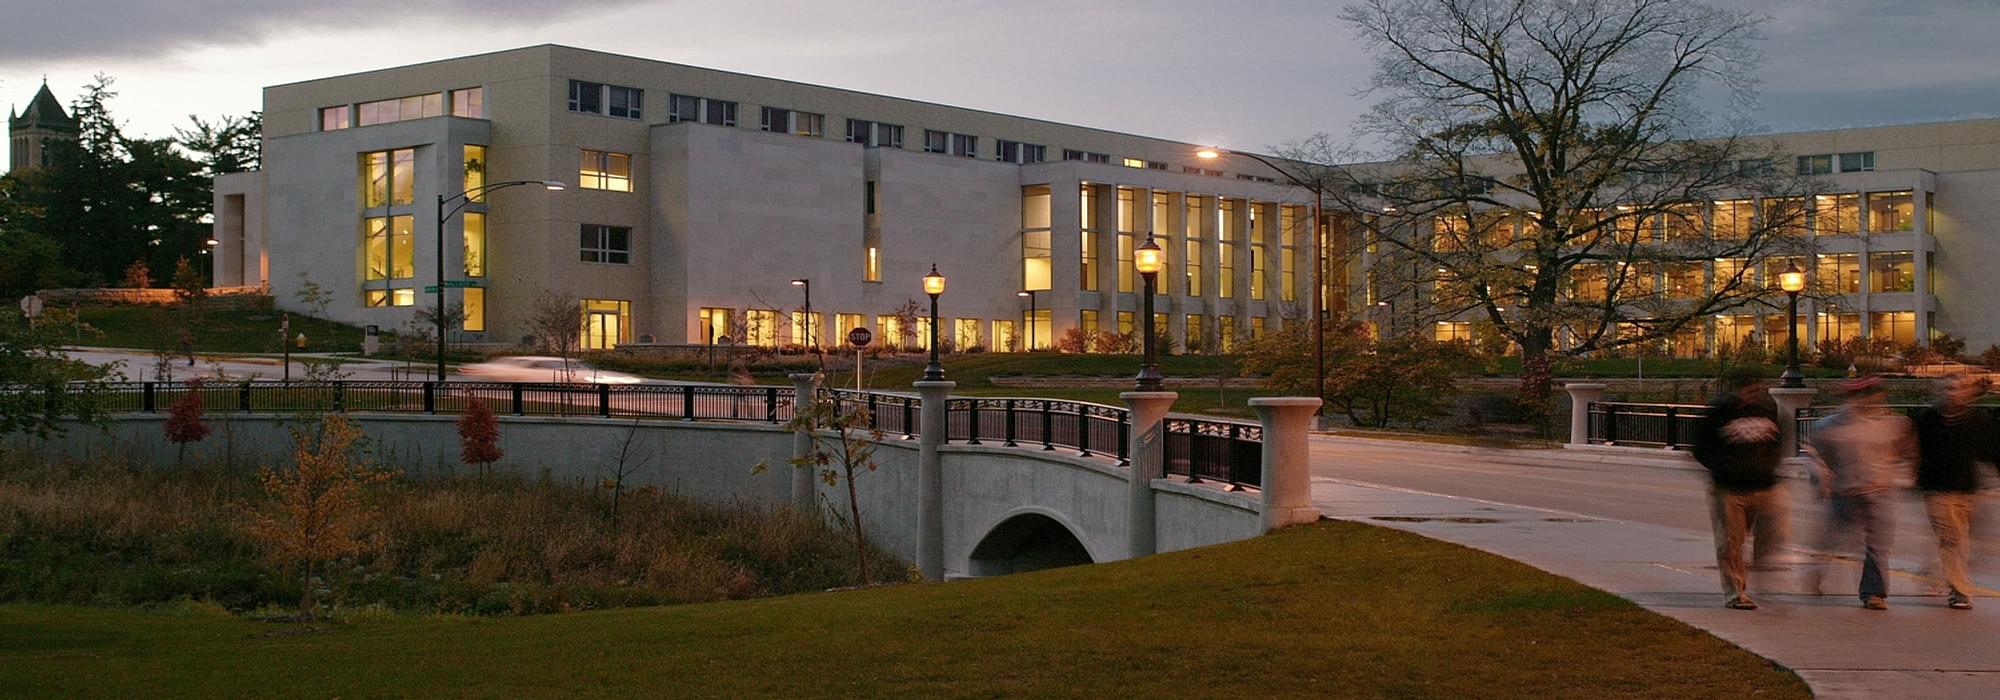 Iowa State University [IOWA STATE], Ames Courses, Fees, Ranking, &  Admission Criteria